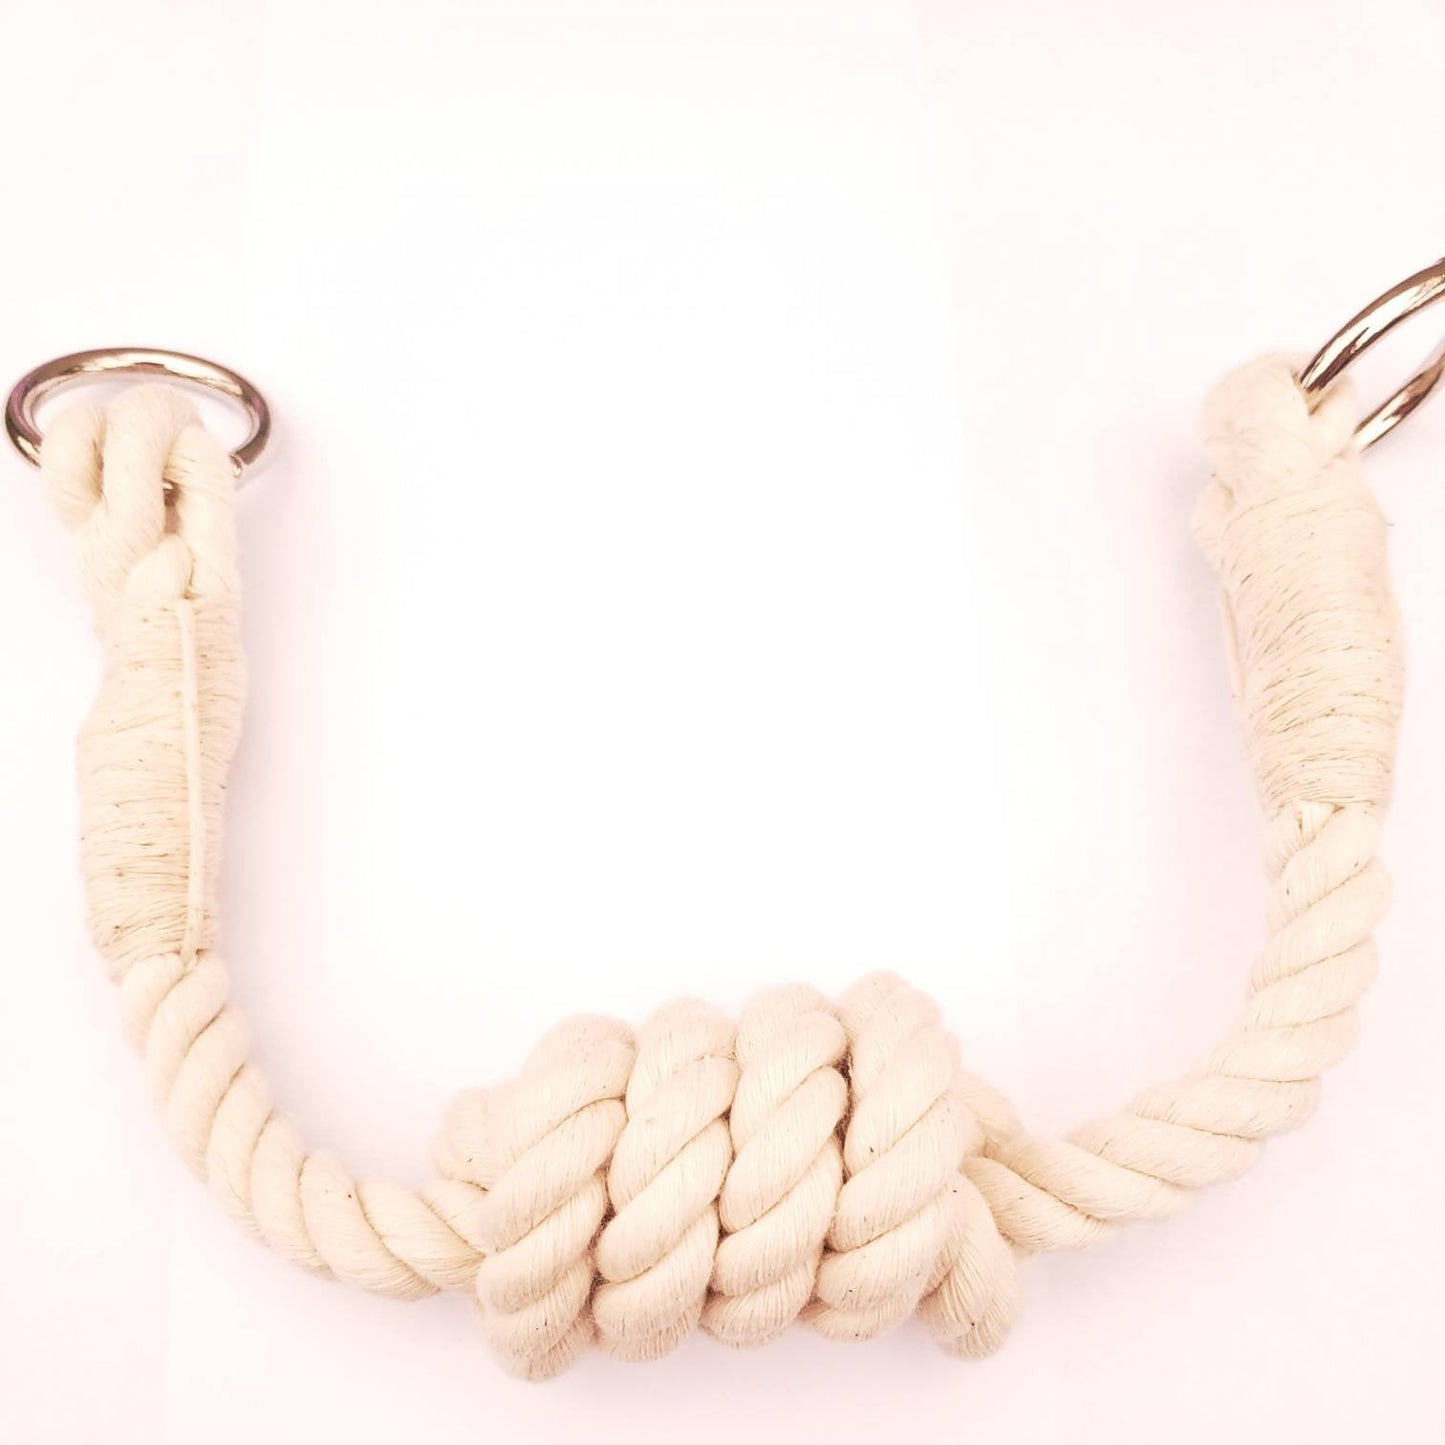 Custom~ Large Rope Bit Gag, 3/8" Cotton Rope BDSM Gag | Vixen's Hidden Desires